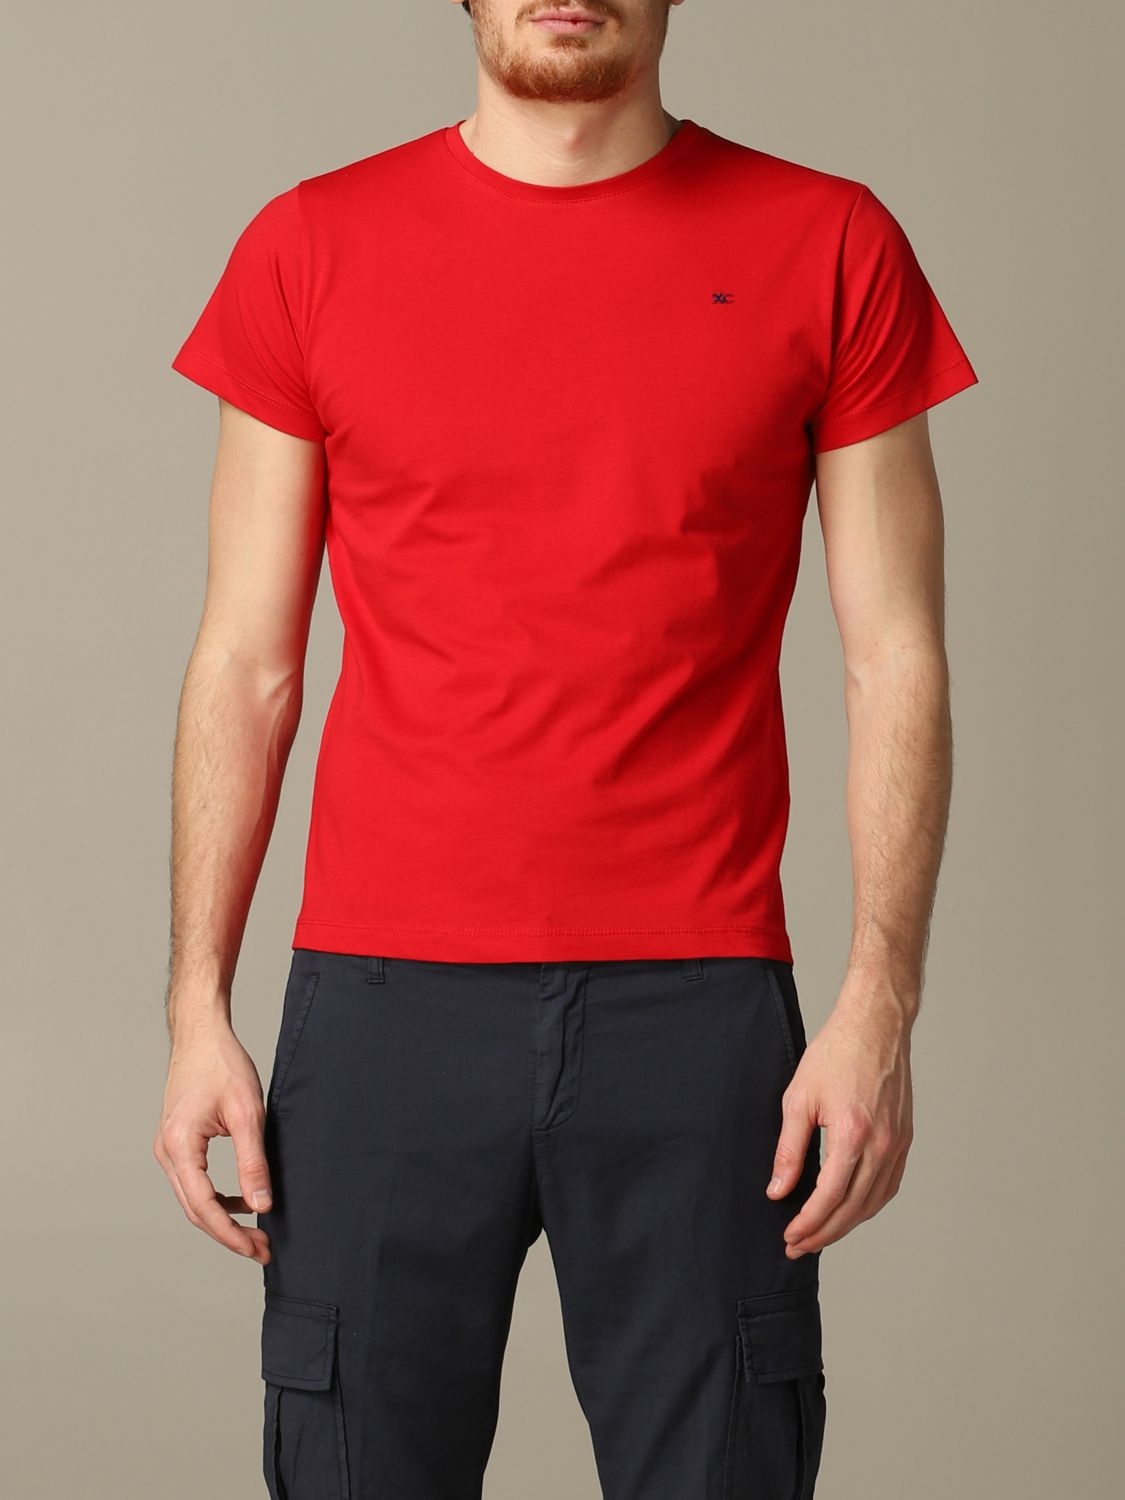 Xc T-Shirt XC Men colour Red